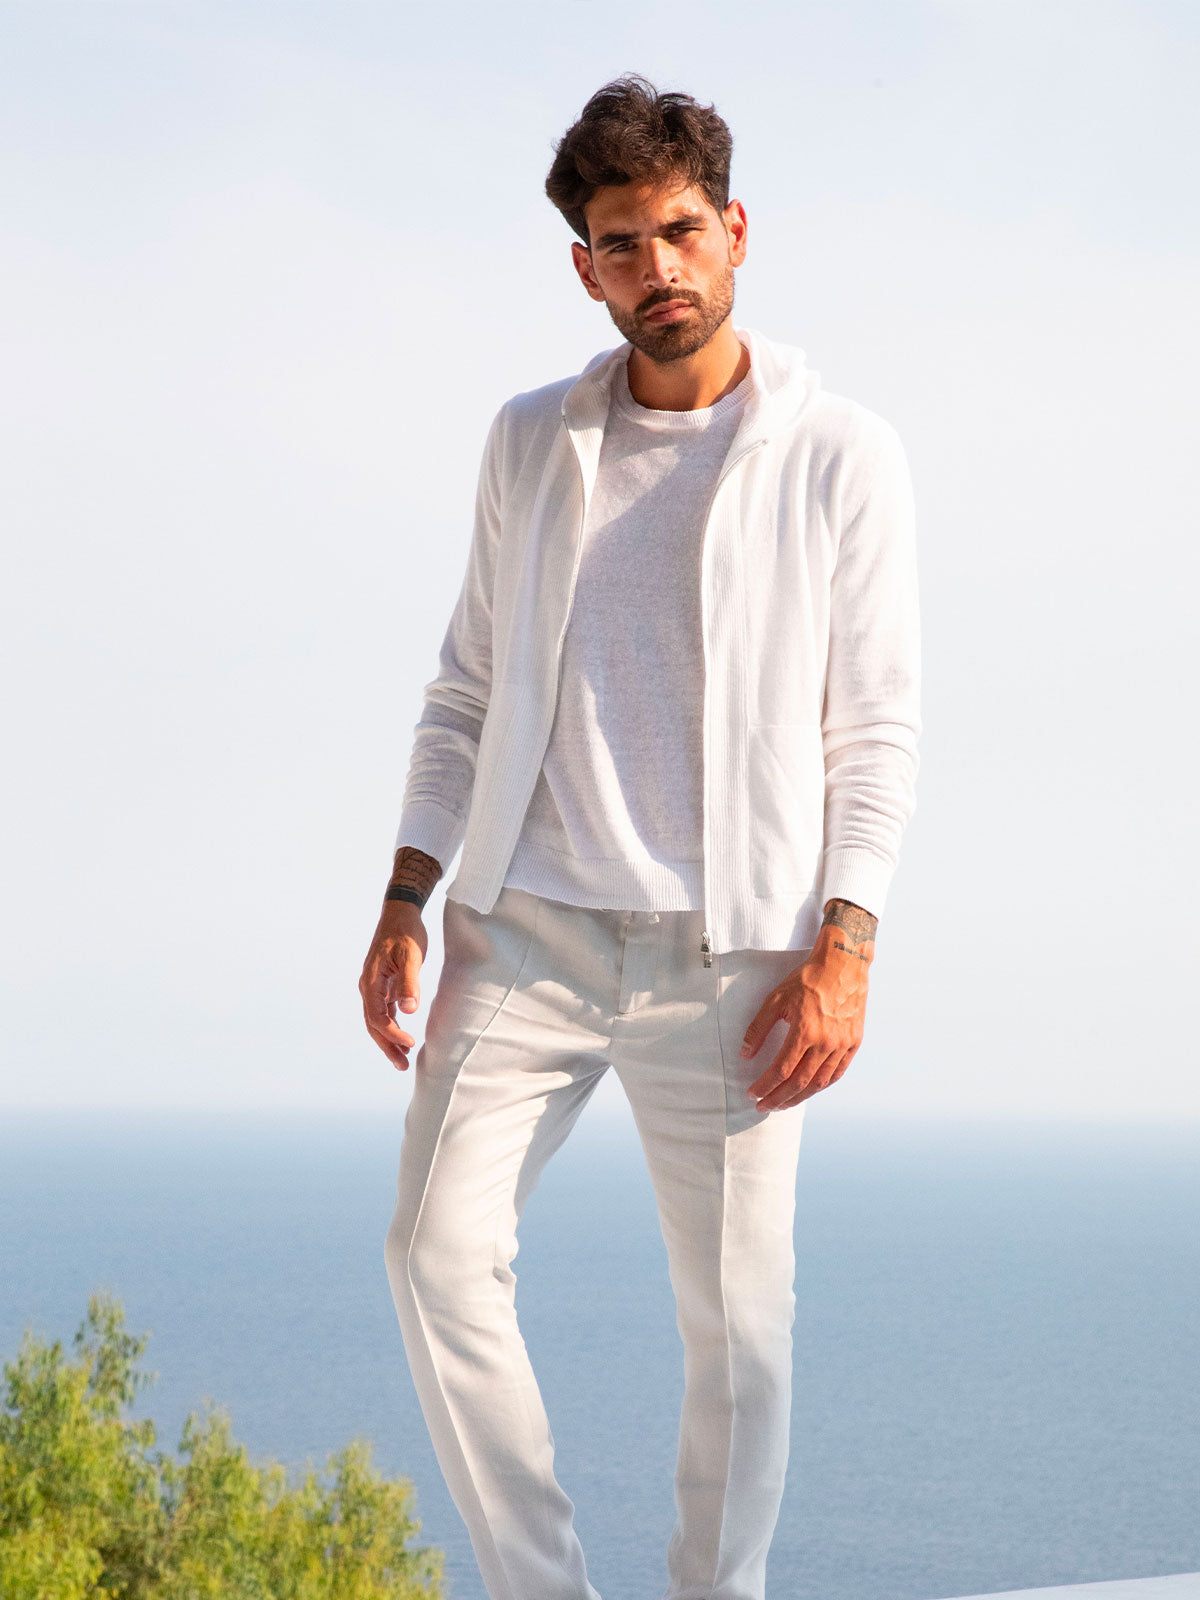 T-Shirt M/C 100% Capri white linen t-shirt worn by model